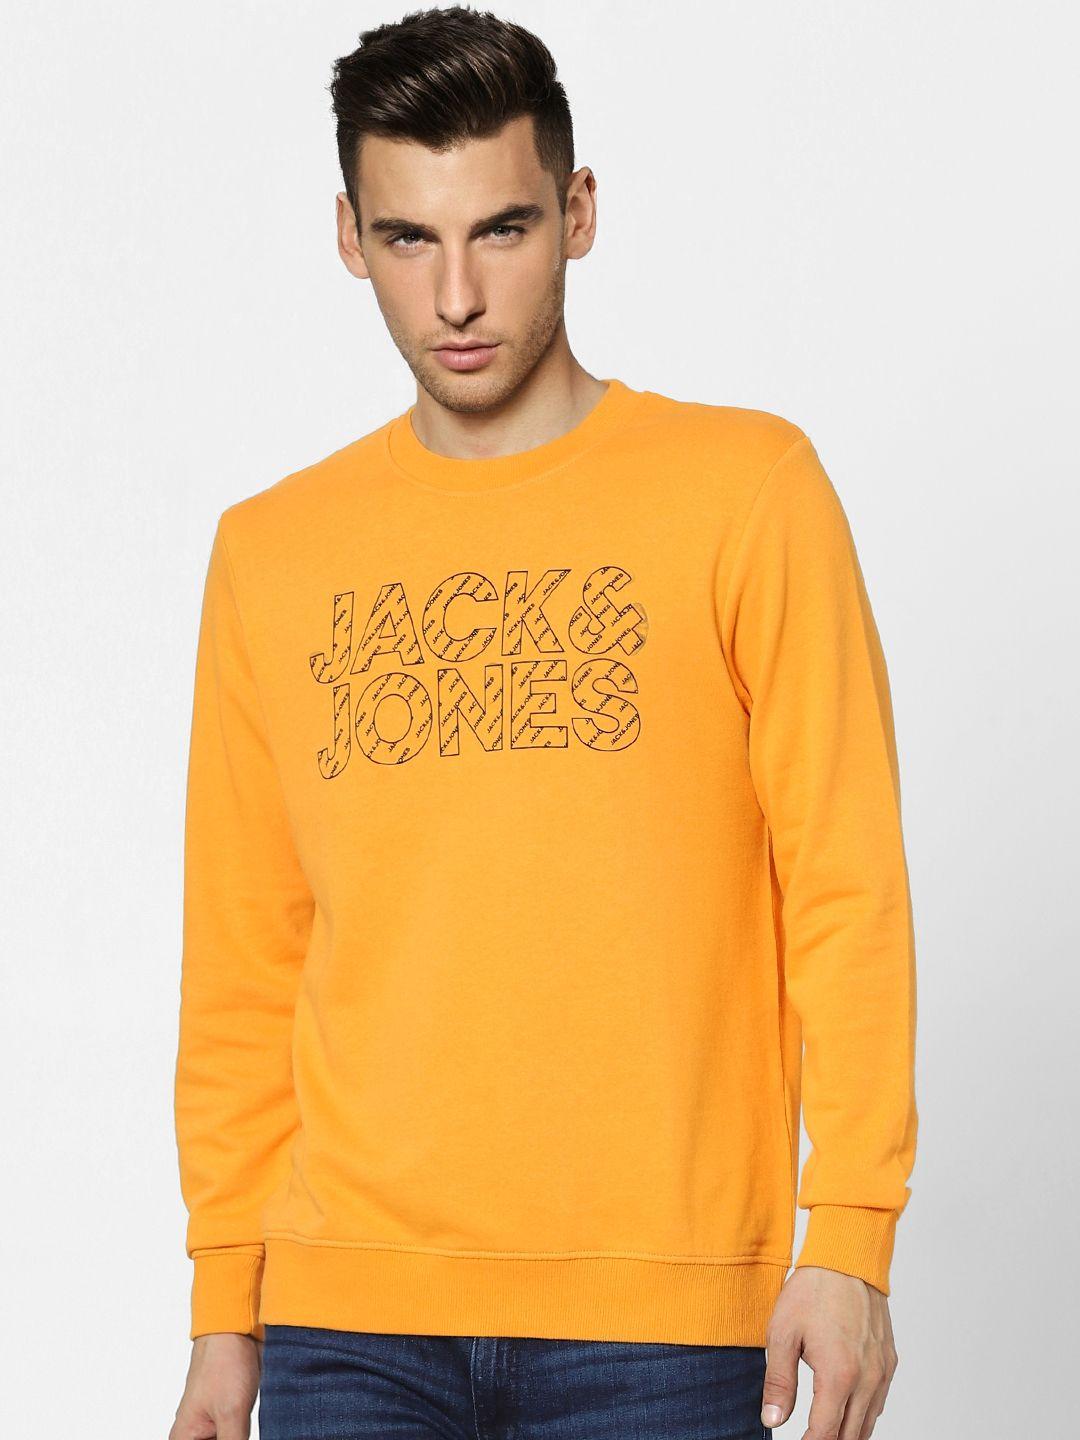 jack & jones men mustard yellow logo printed sweatshirt